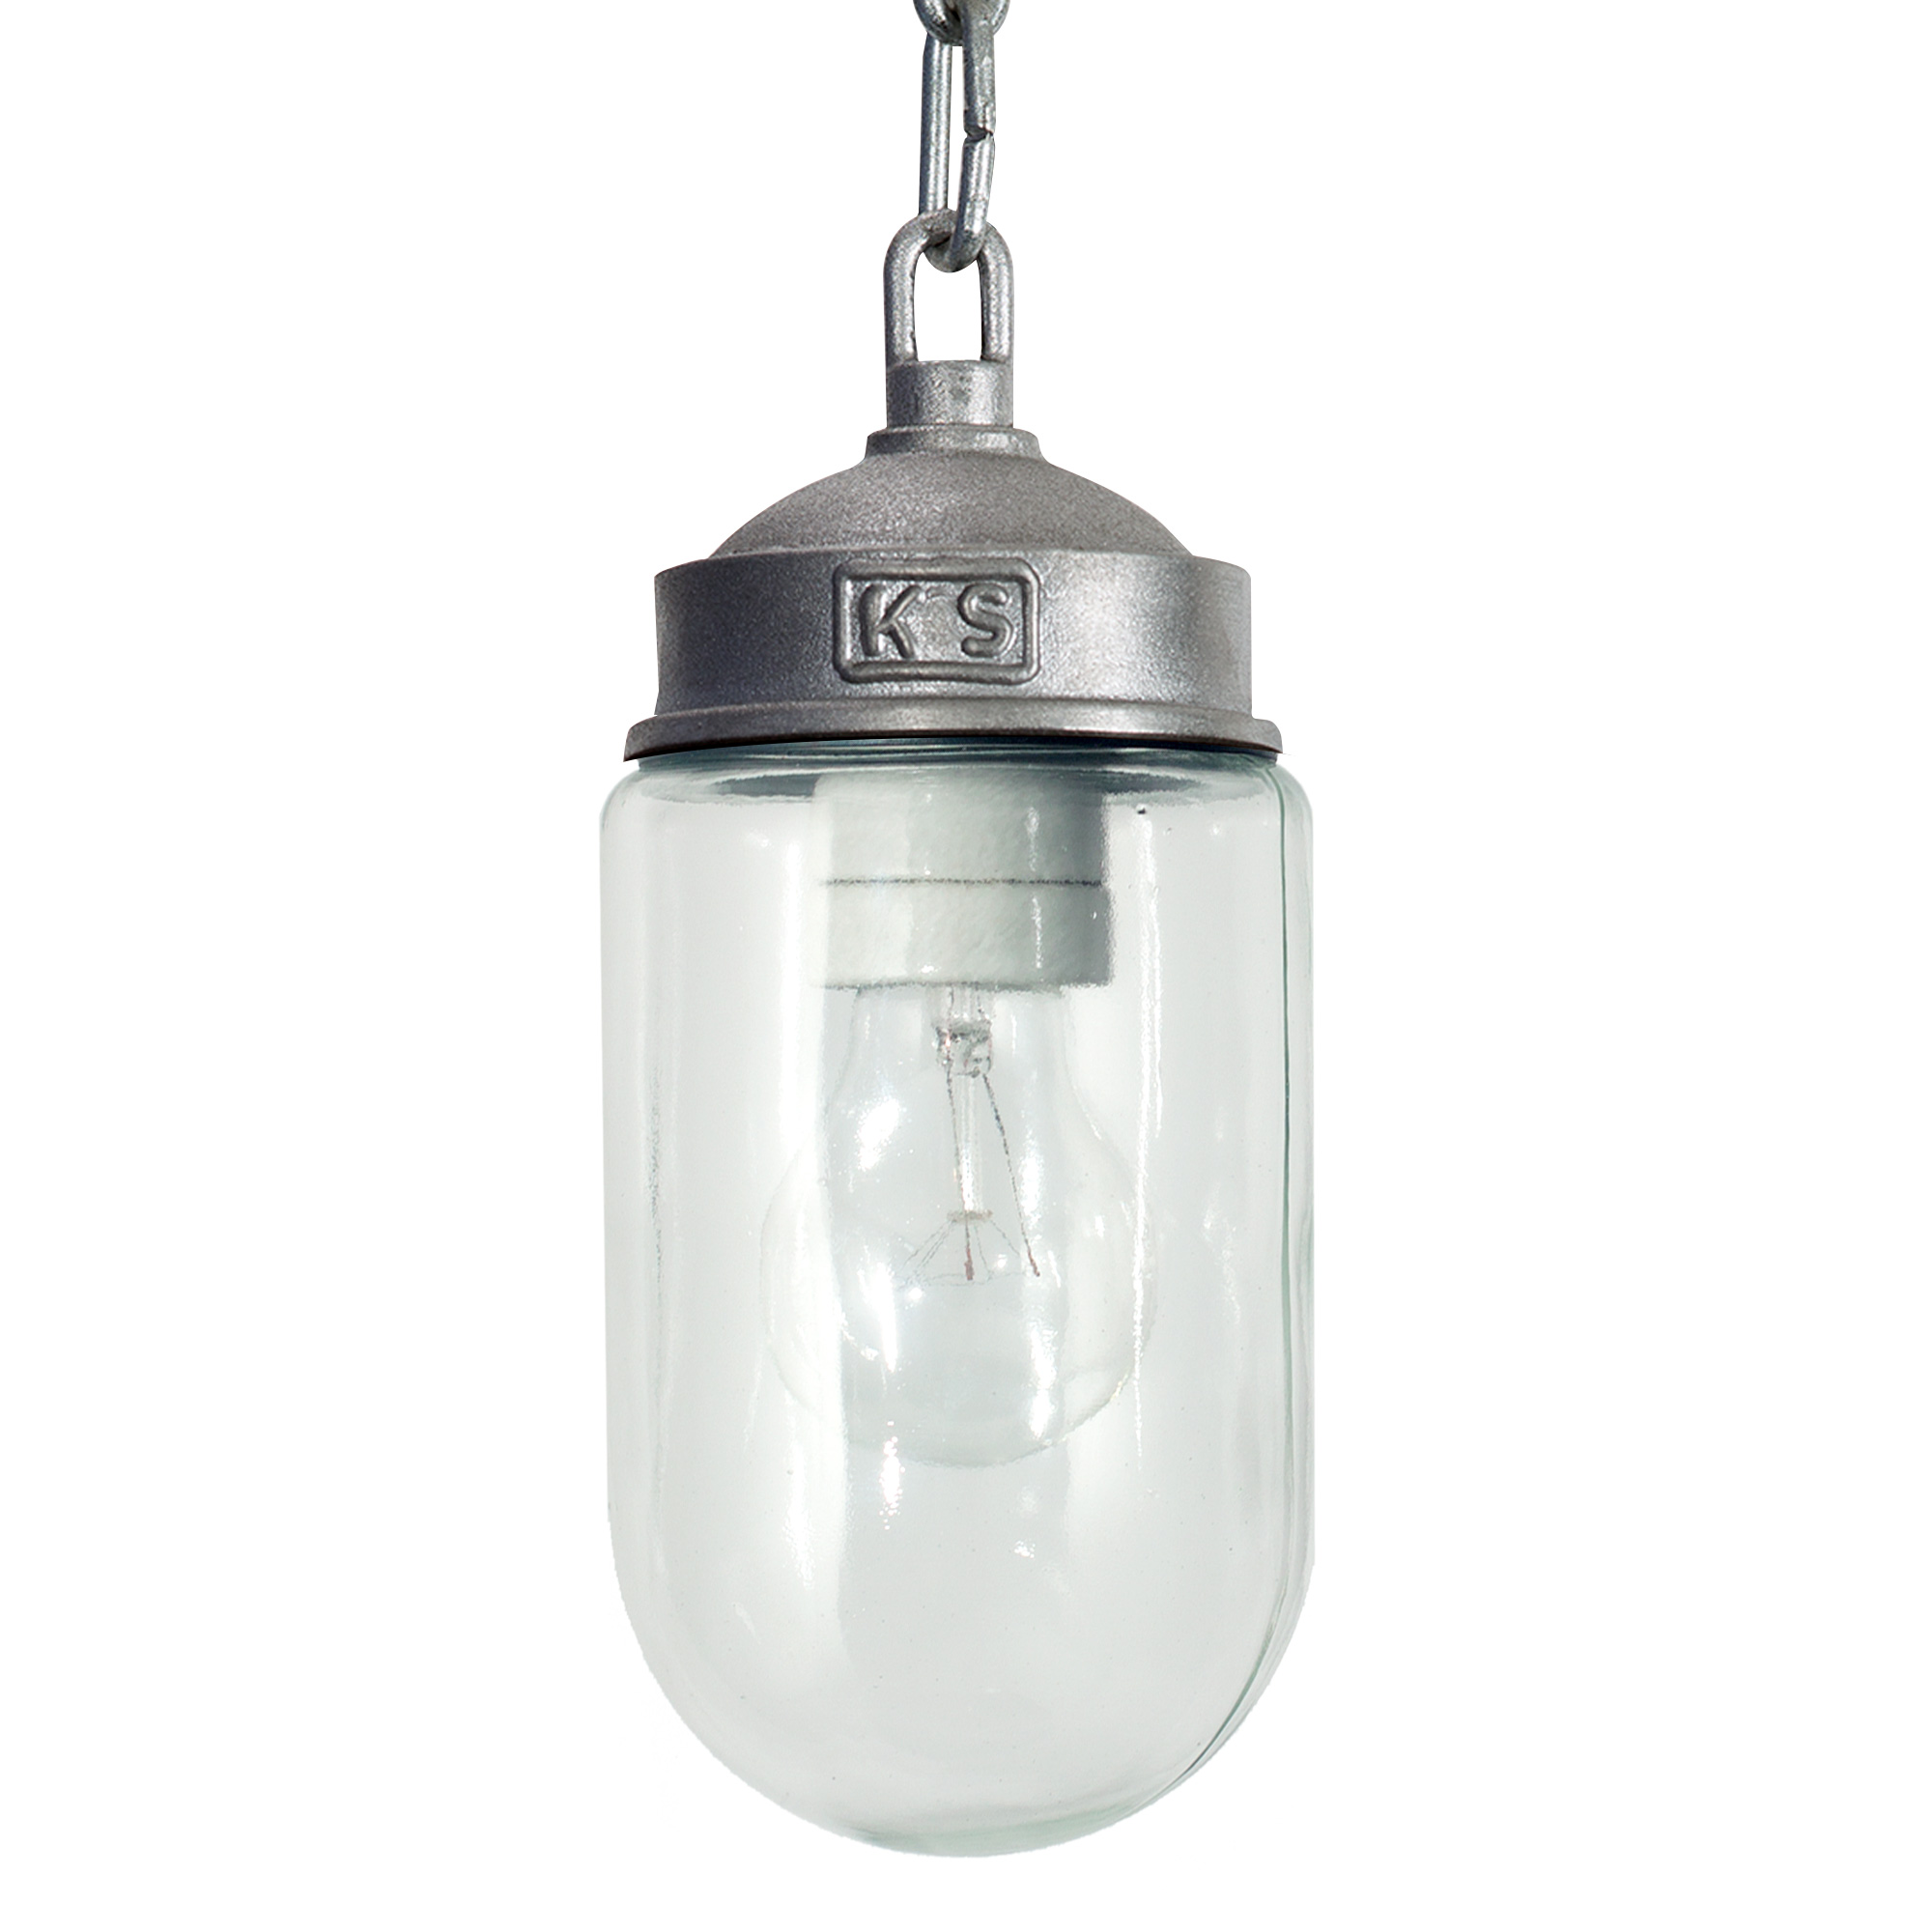 Plafondlamp One-Eighty kettinglamp E27 fitting verandalamp